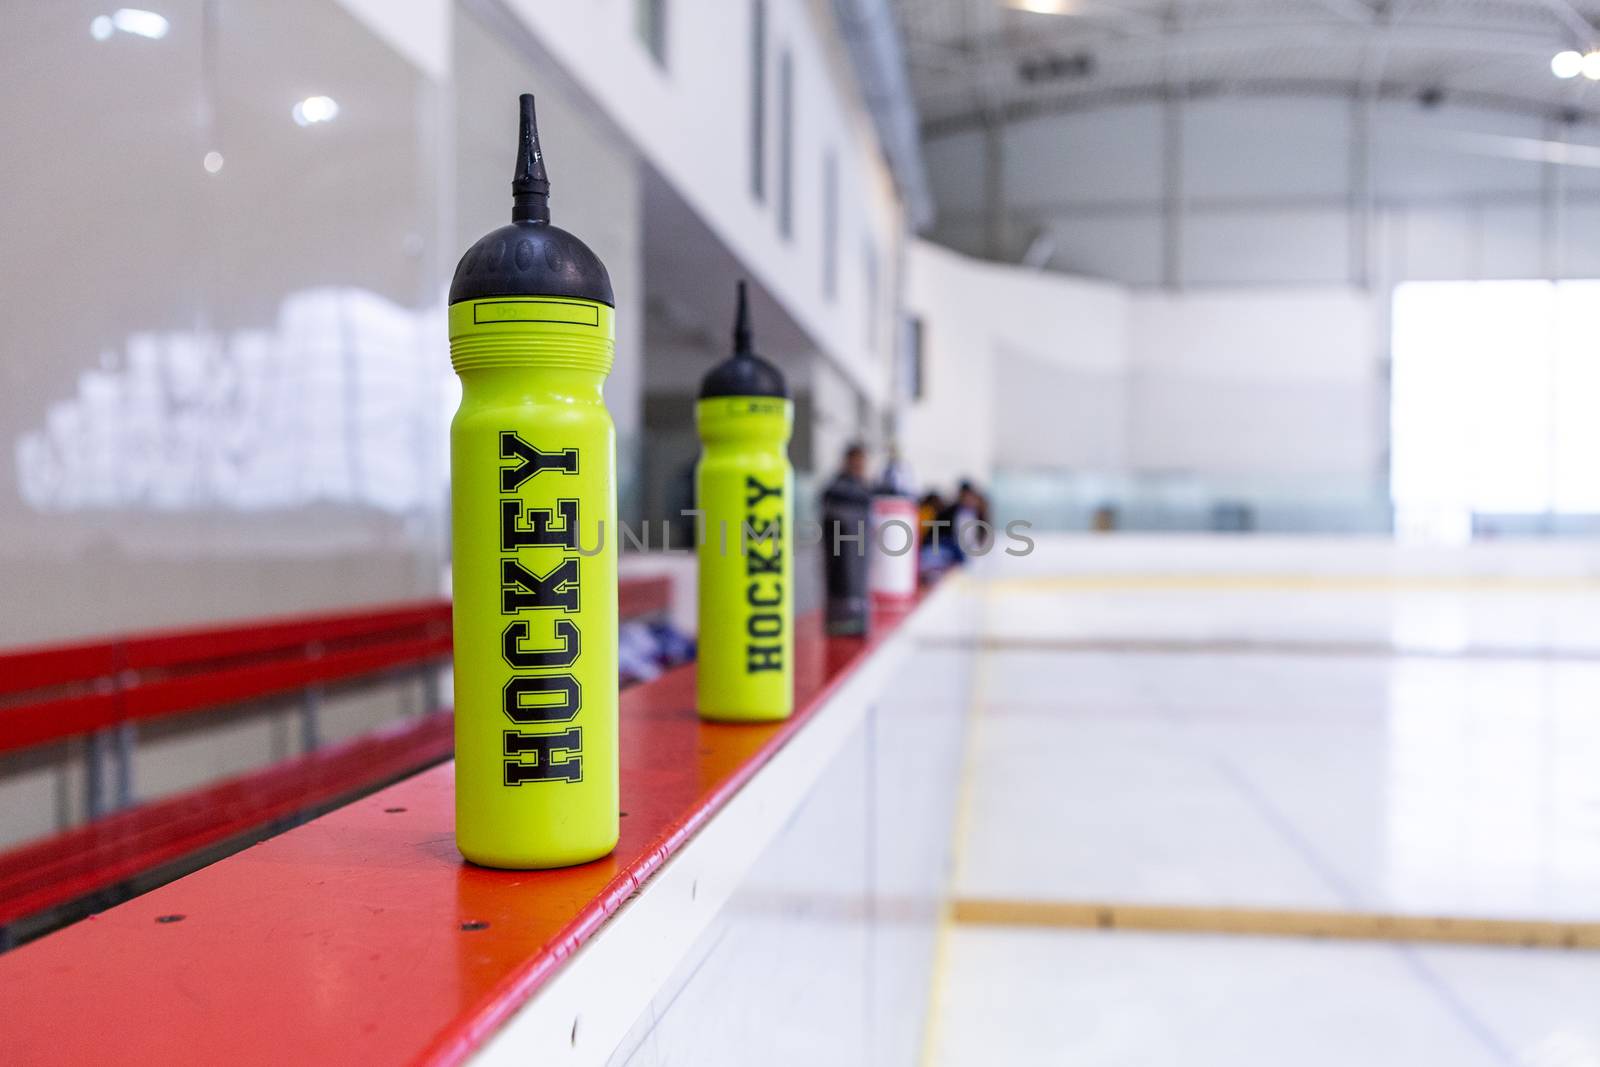 training ice hockey rink, bottle on board